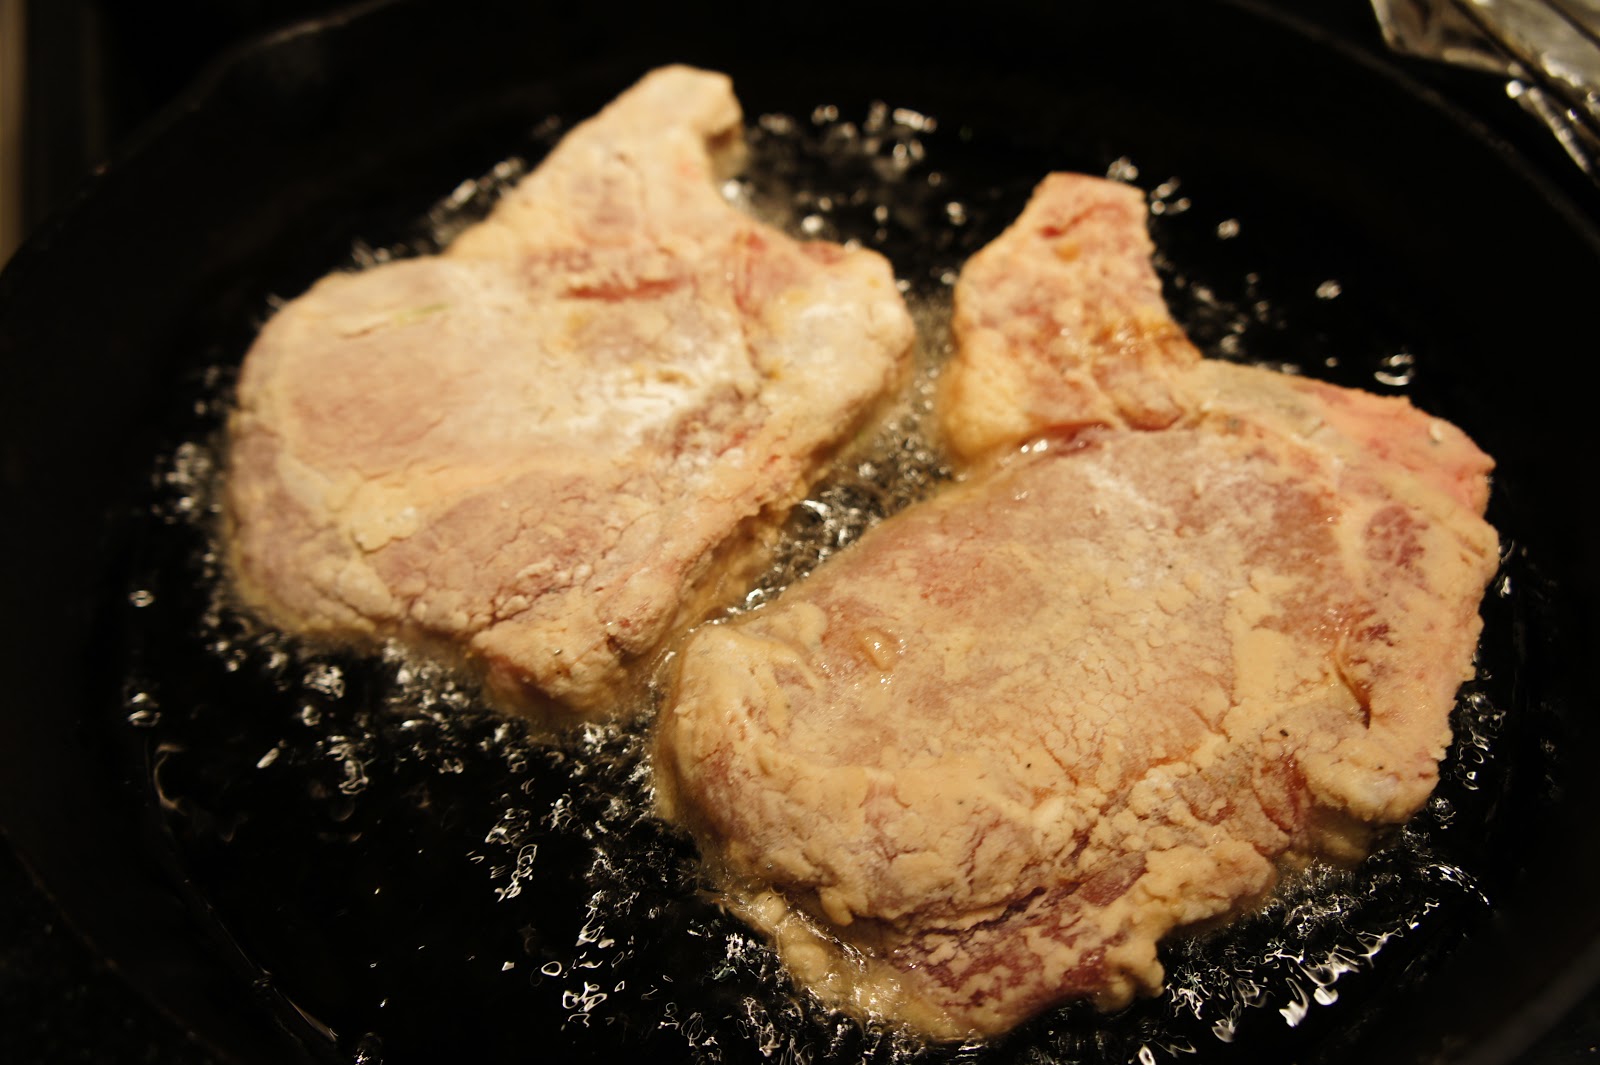 Pan Fried Pork Chop Dinner